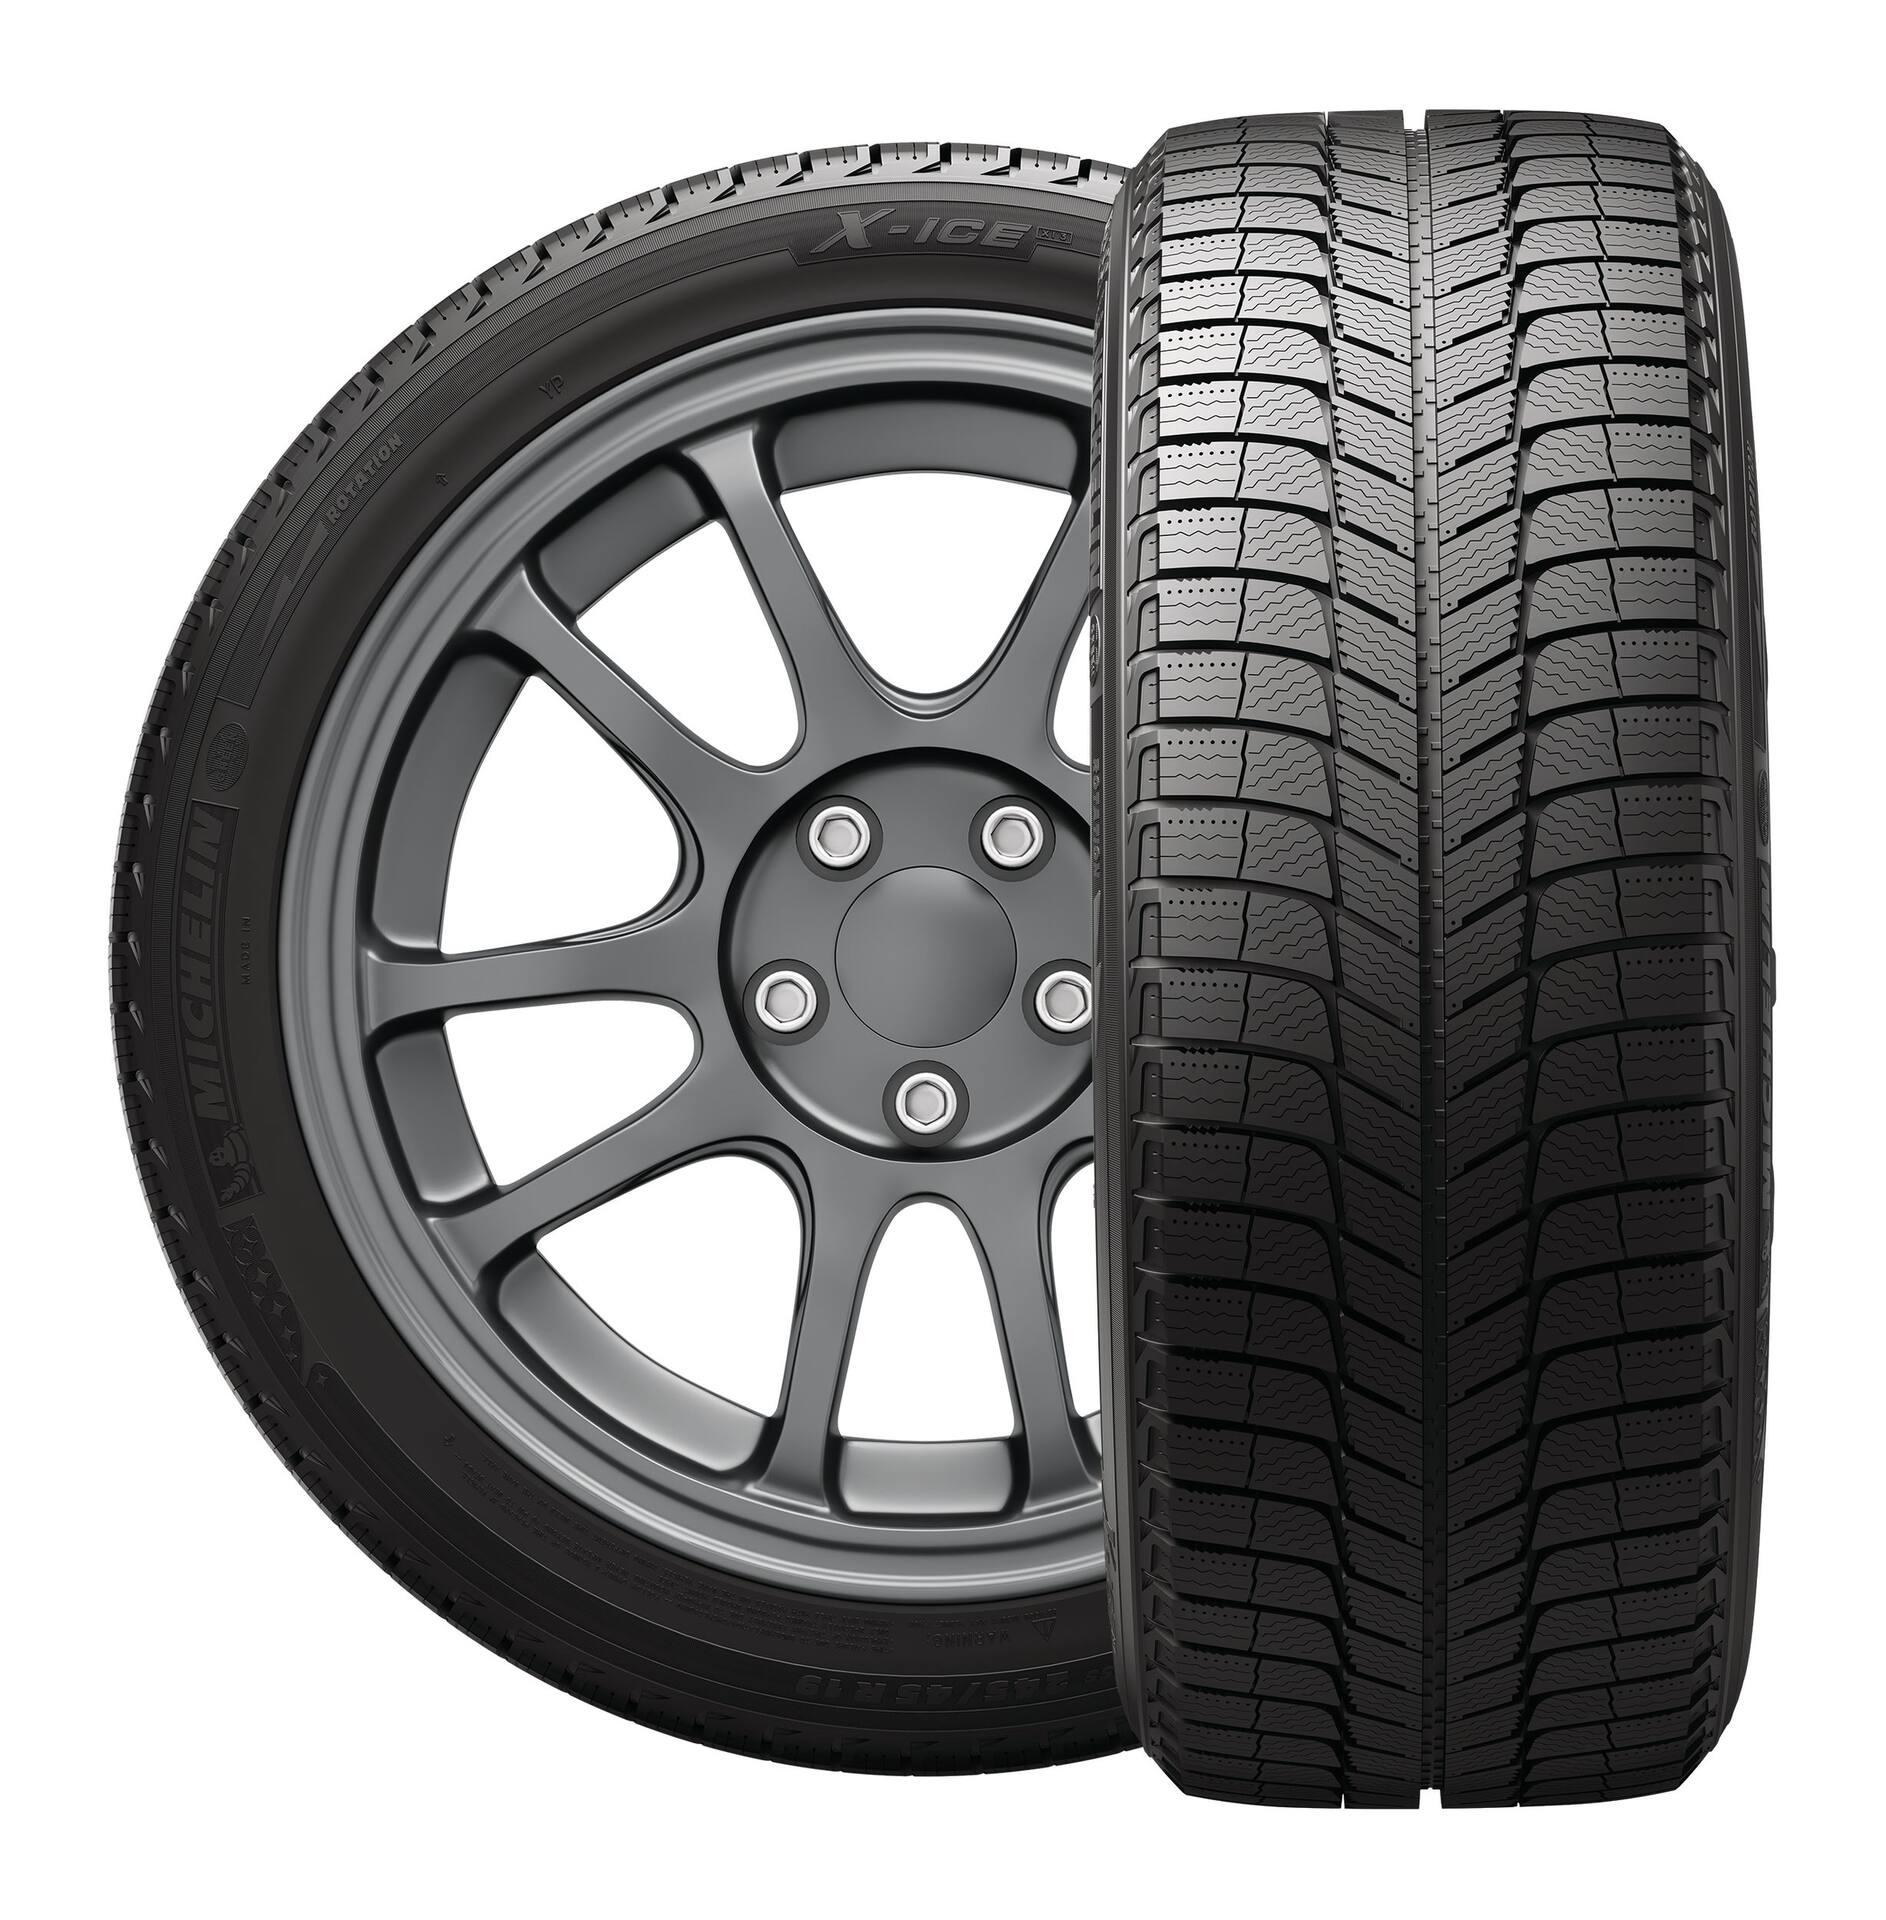 Michelin X-Ice Xi3 Tire